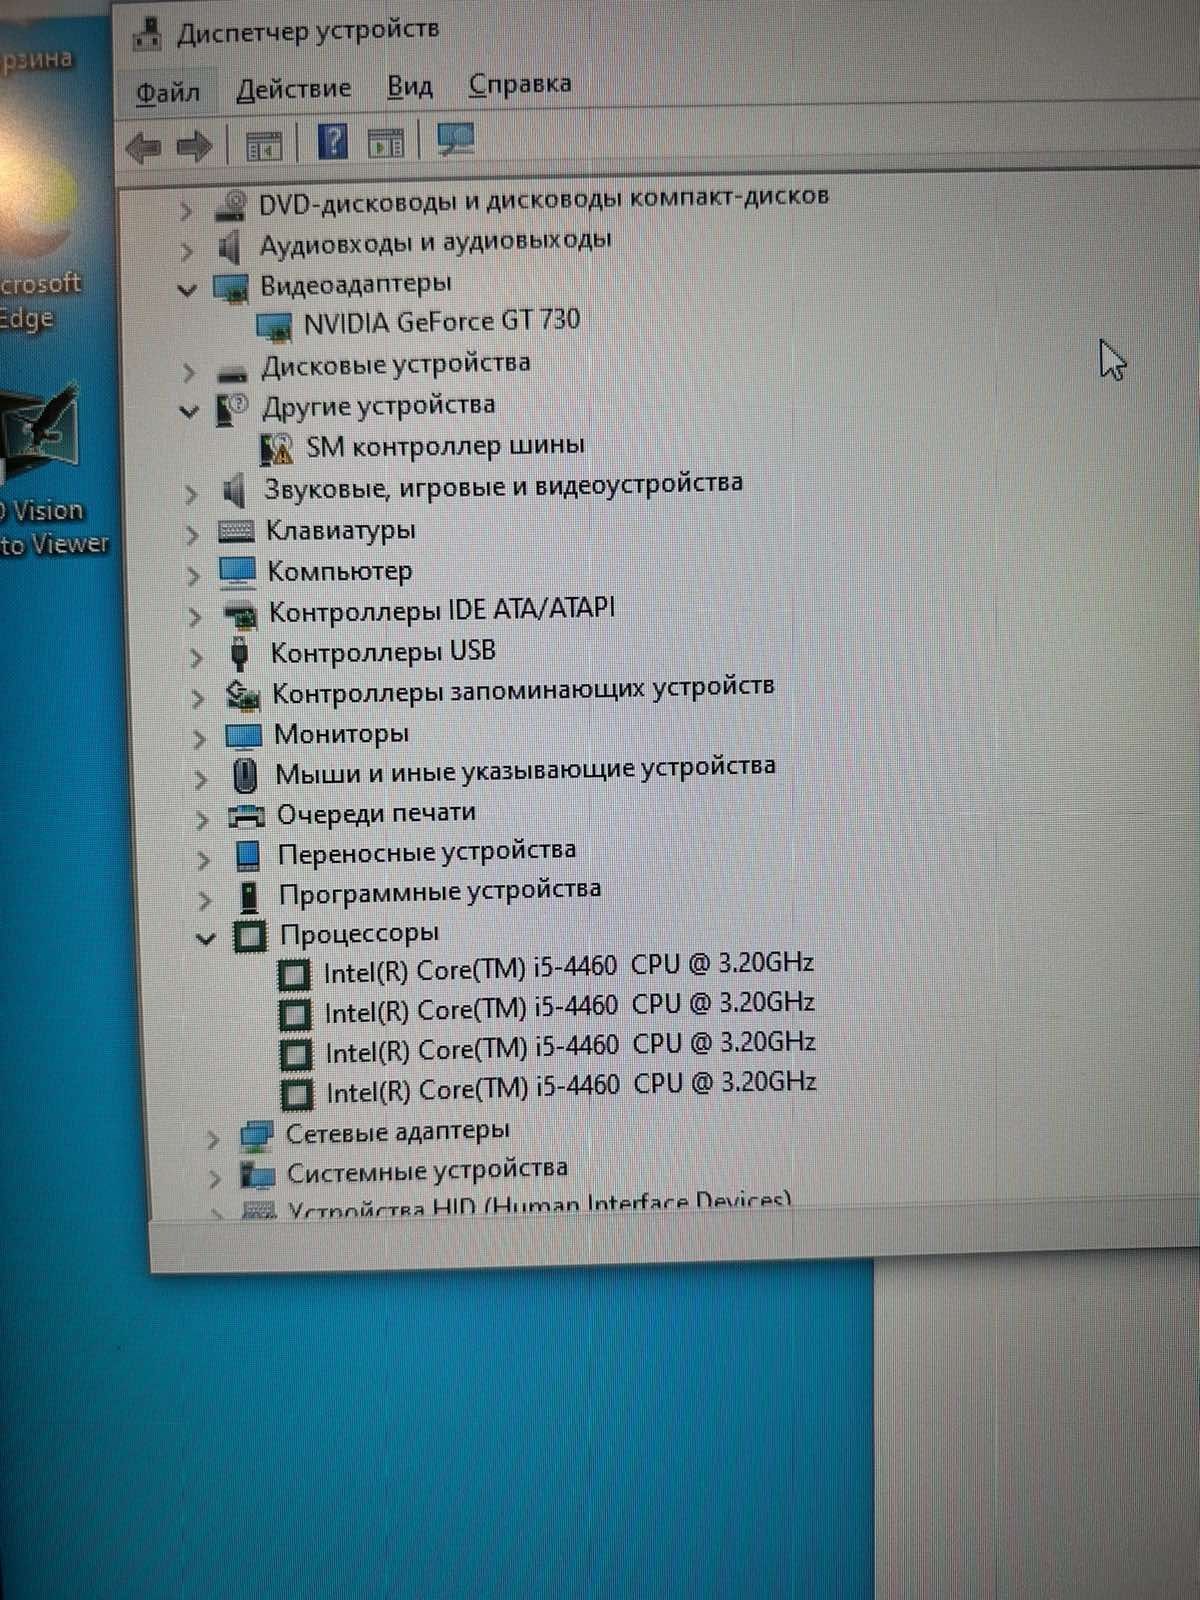 Dell I5-4460 MSI 730 2gb 8gb ddr3 wi-fi